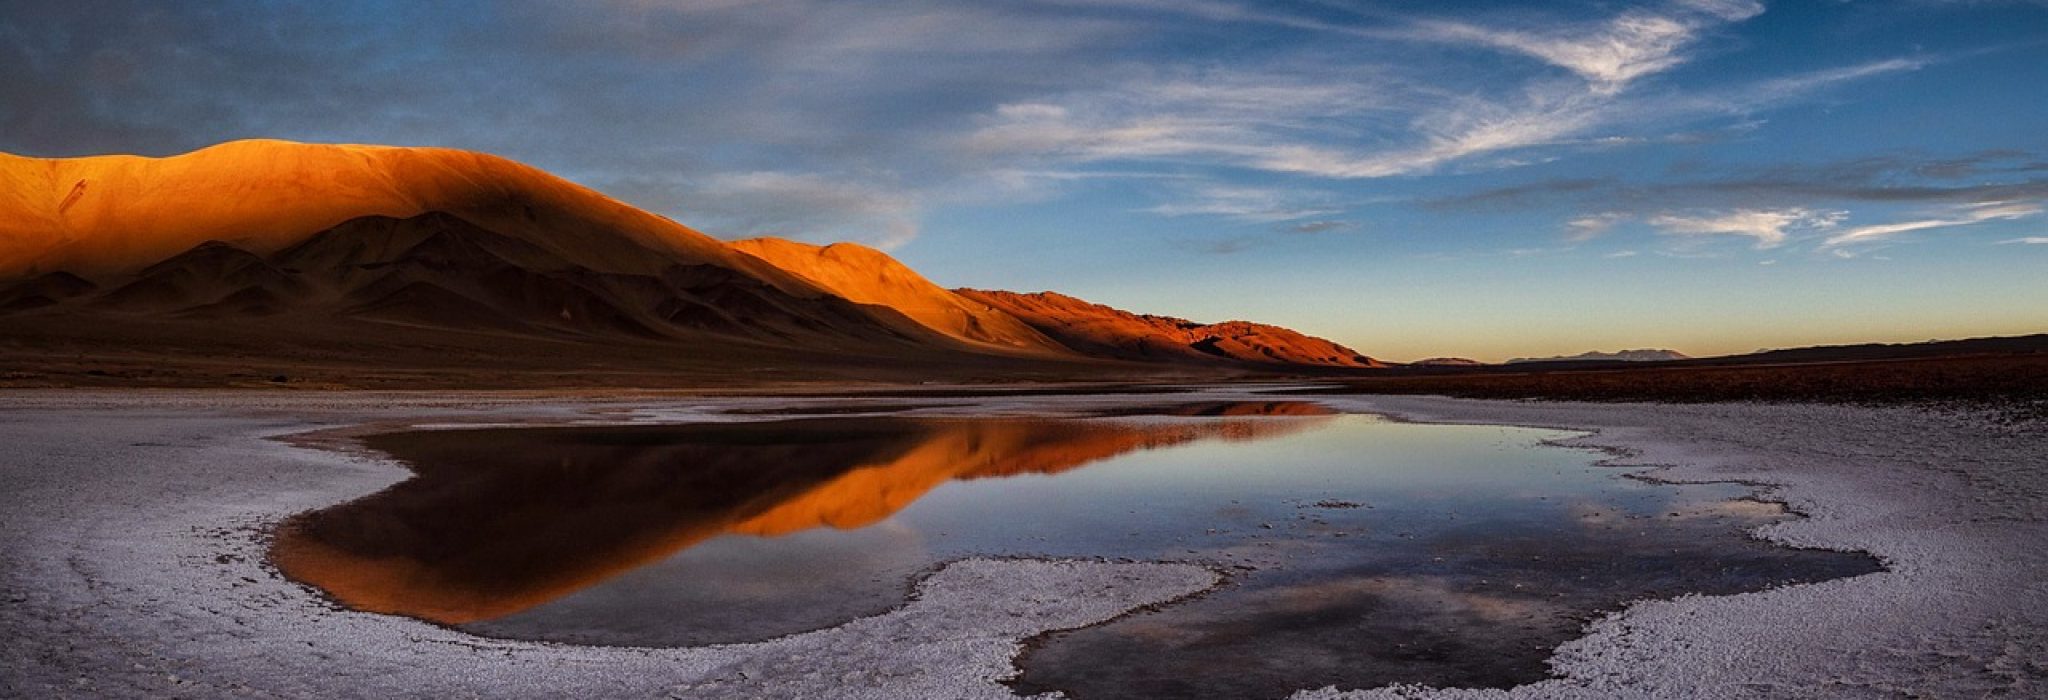 Salt flats in Andes